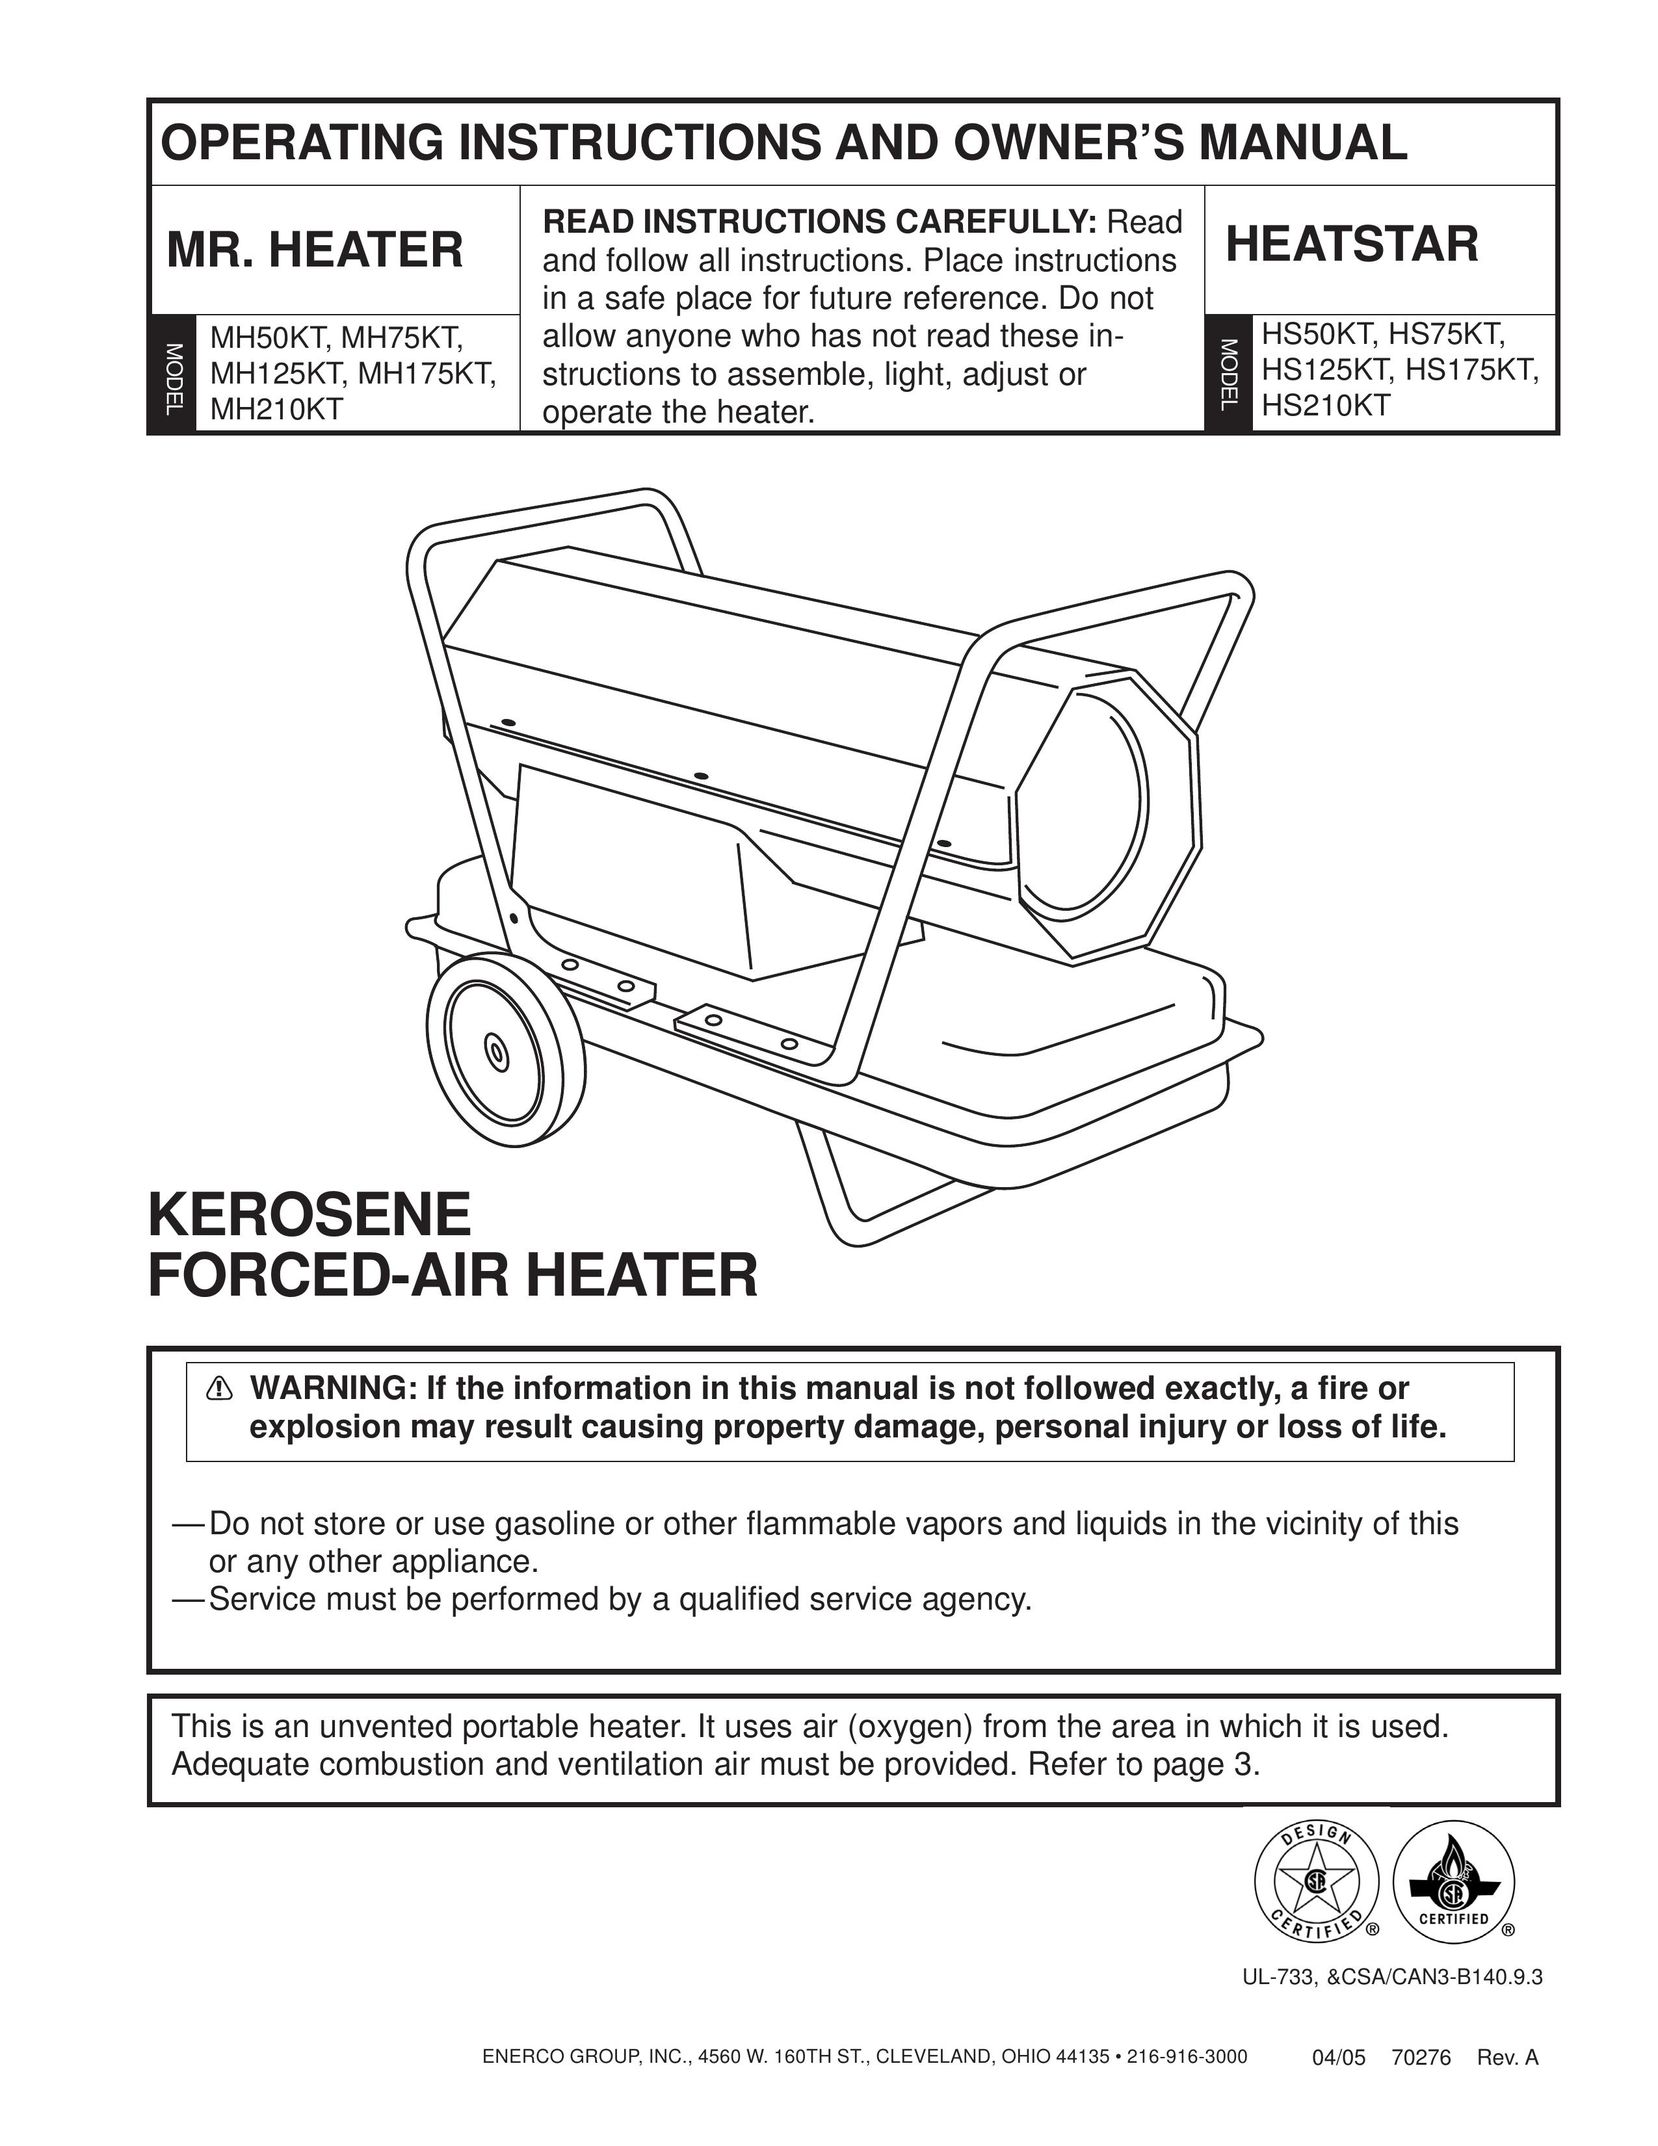 Enerco HS125KT Gas Heater User Manual